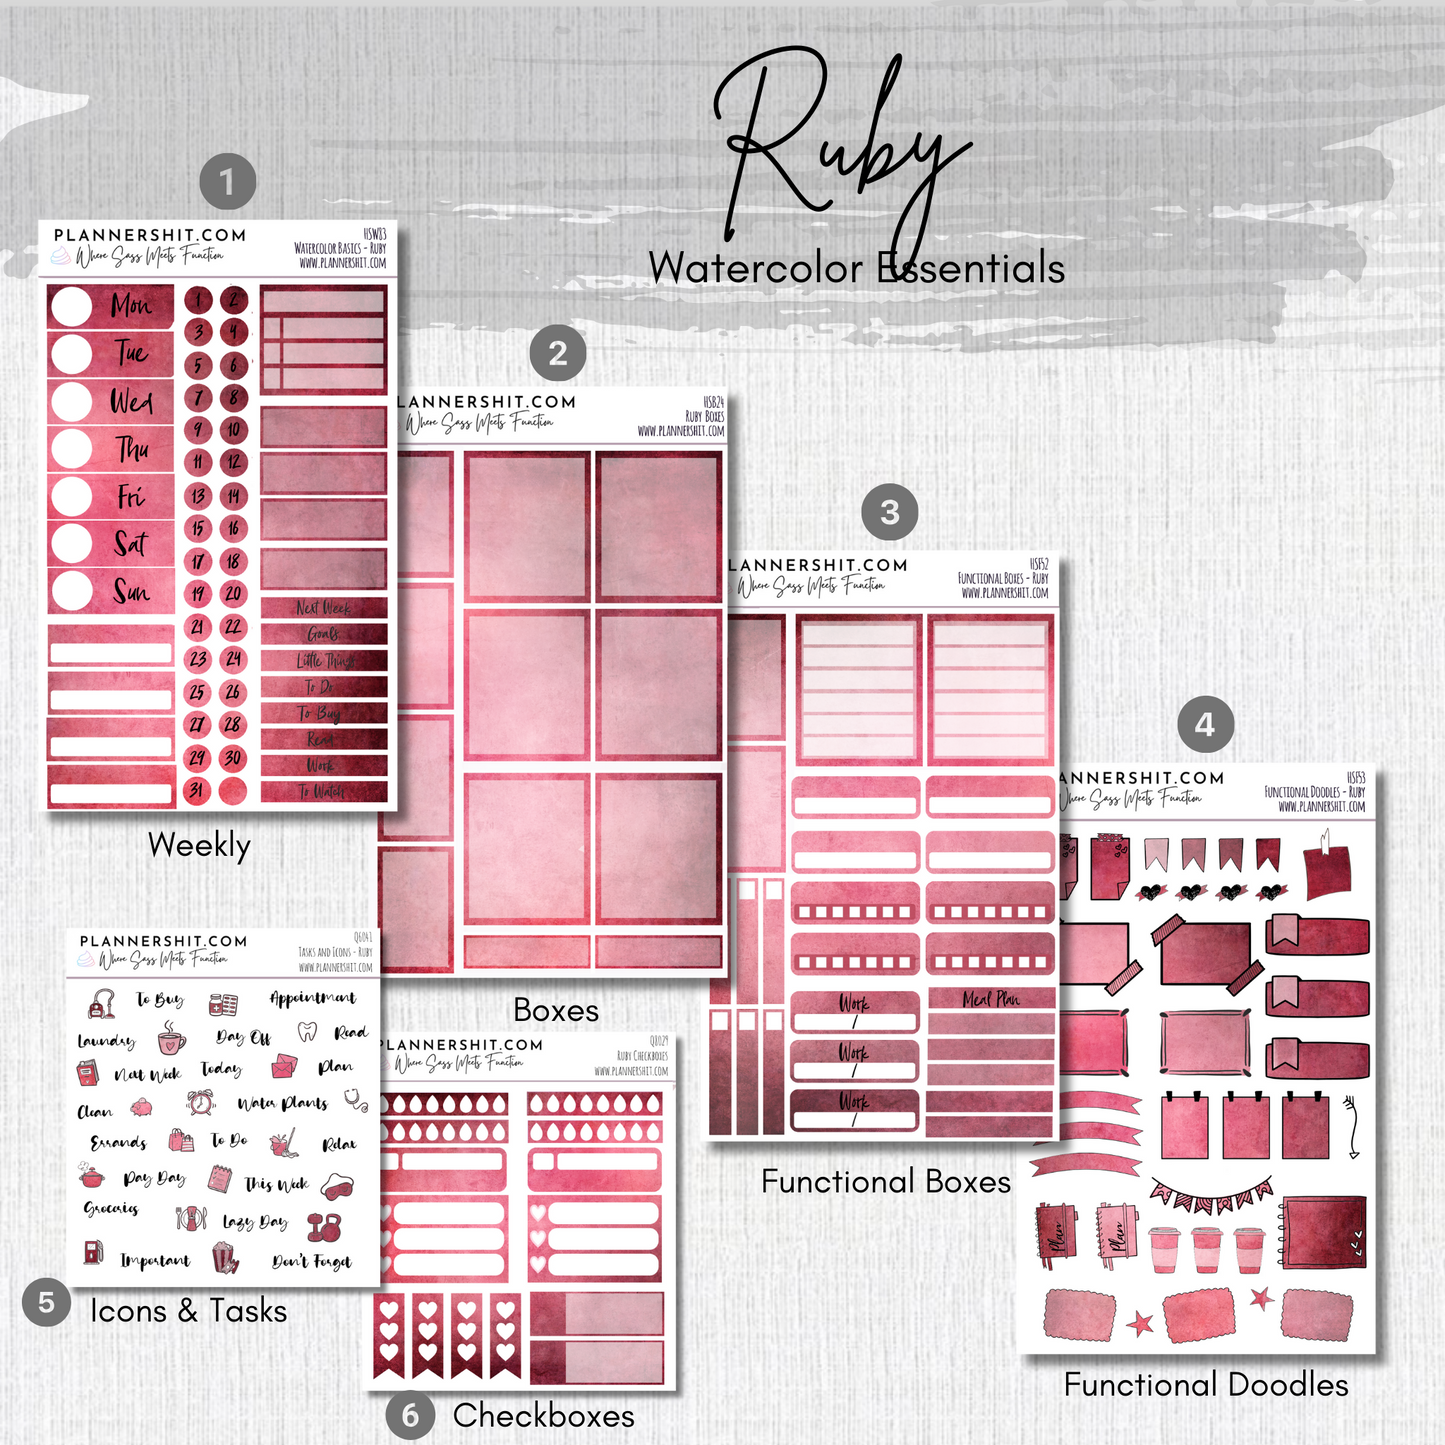 Ruby (Watercolor Essentials)